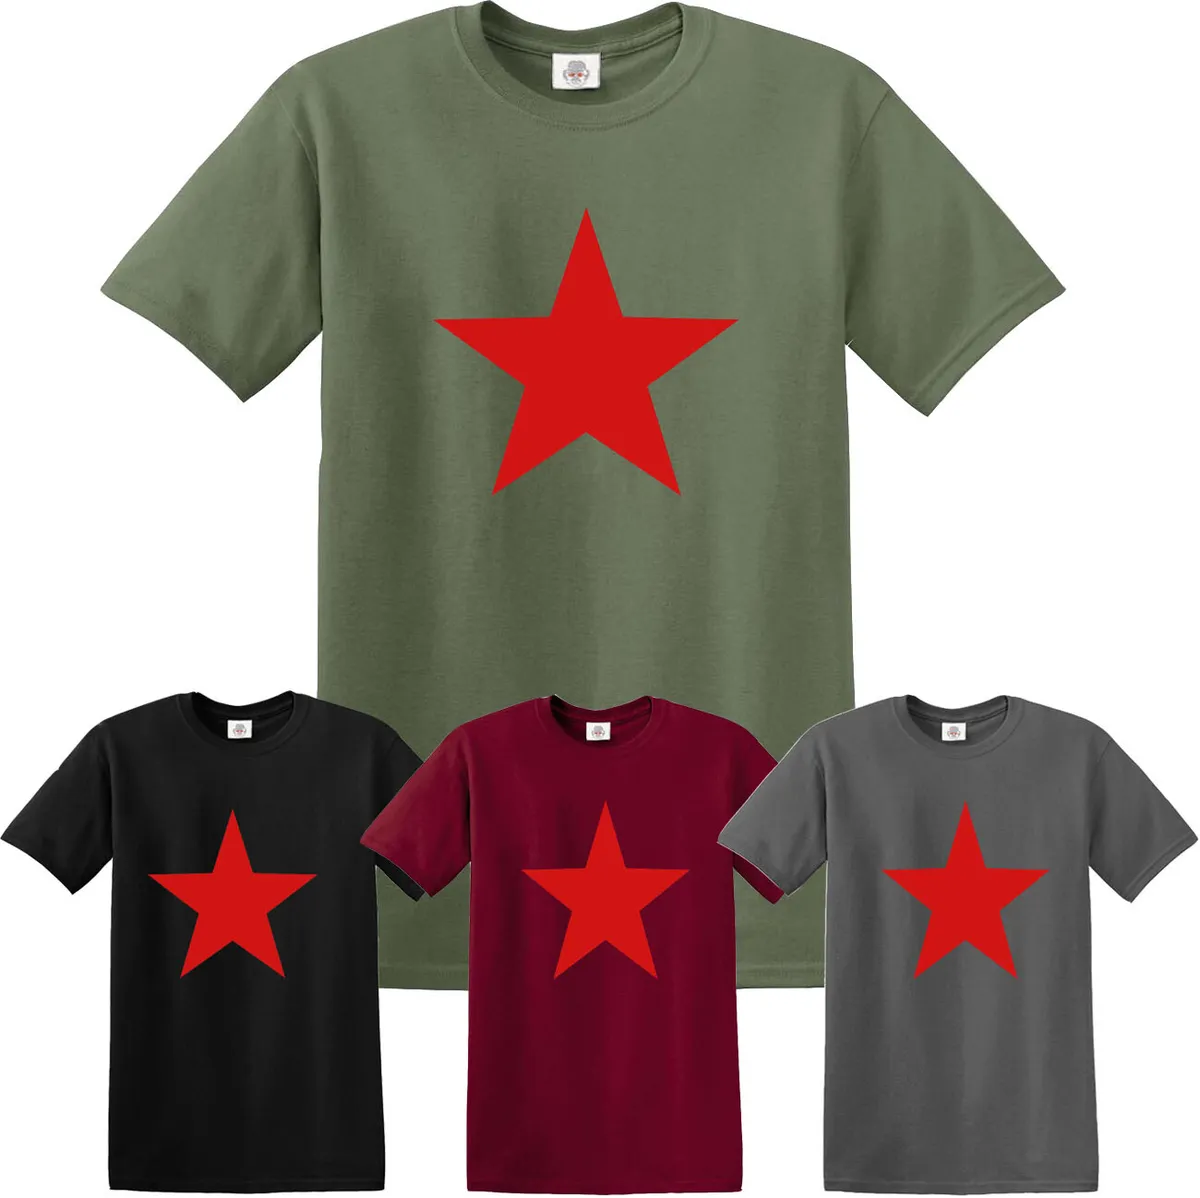 | Sowjet Guerra Kommunistische Roter Revolution USSR Stern eBay Che Cccp Union T-Shirt